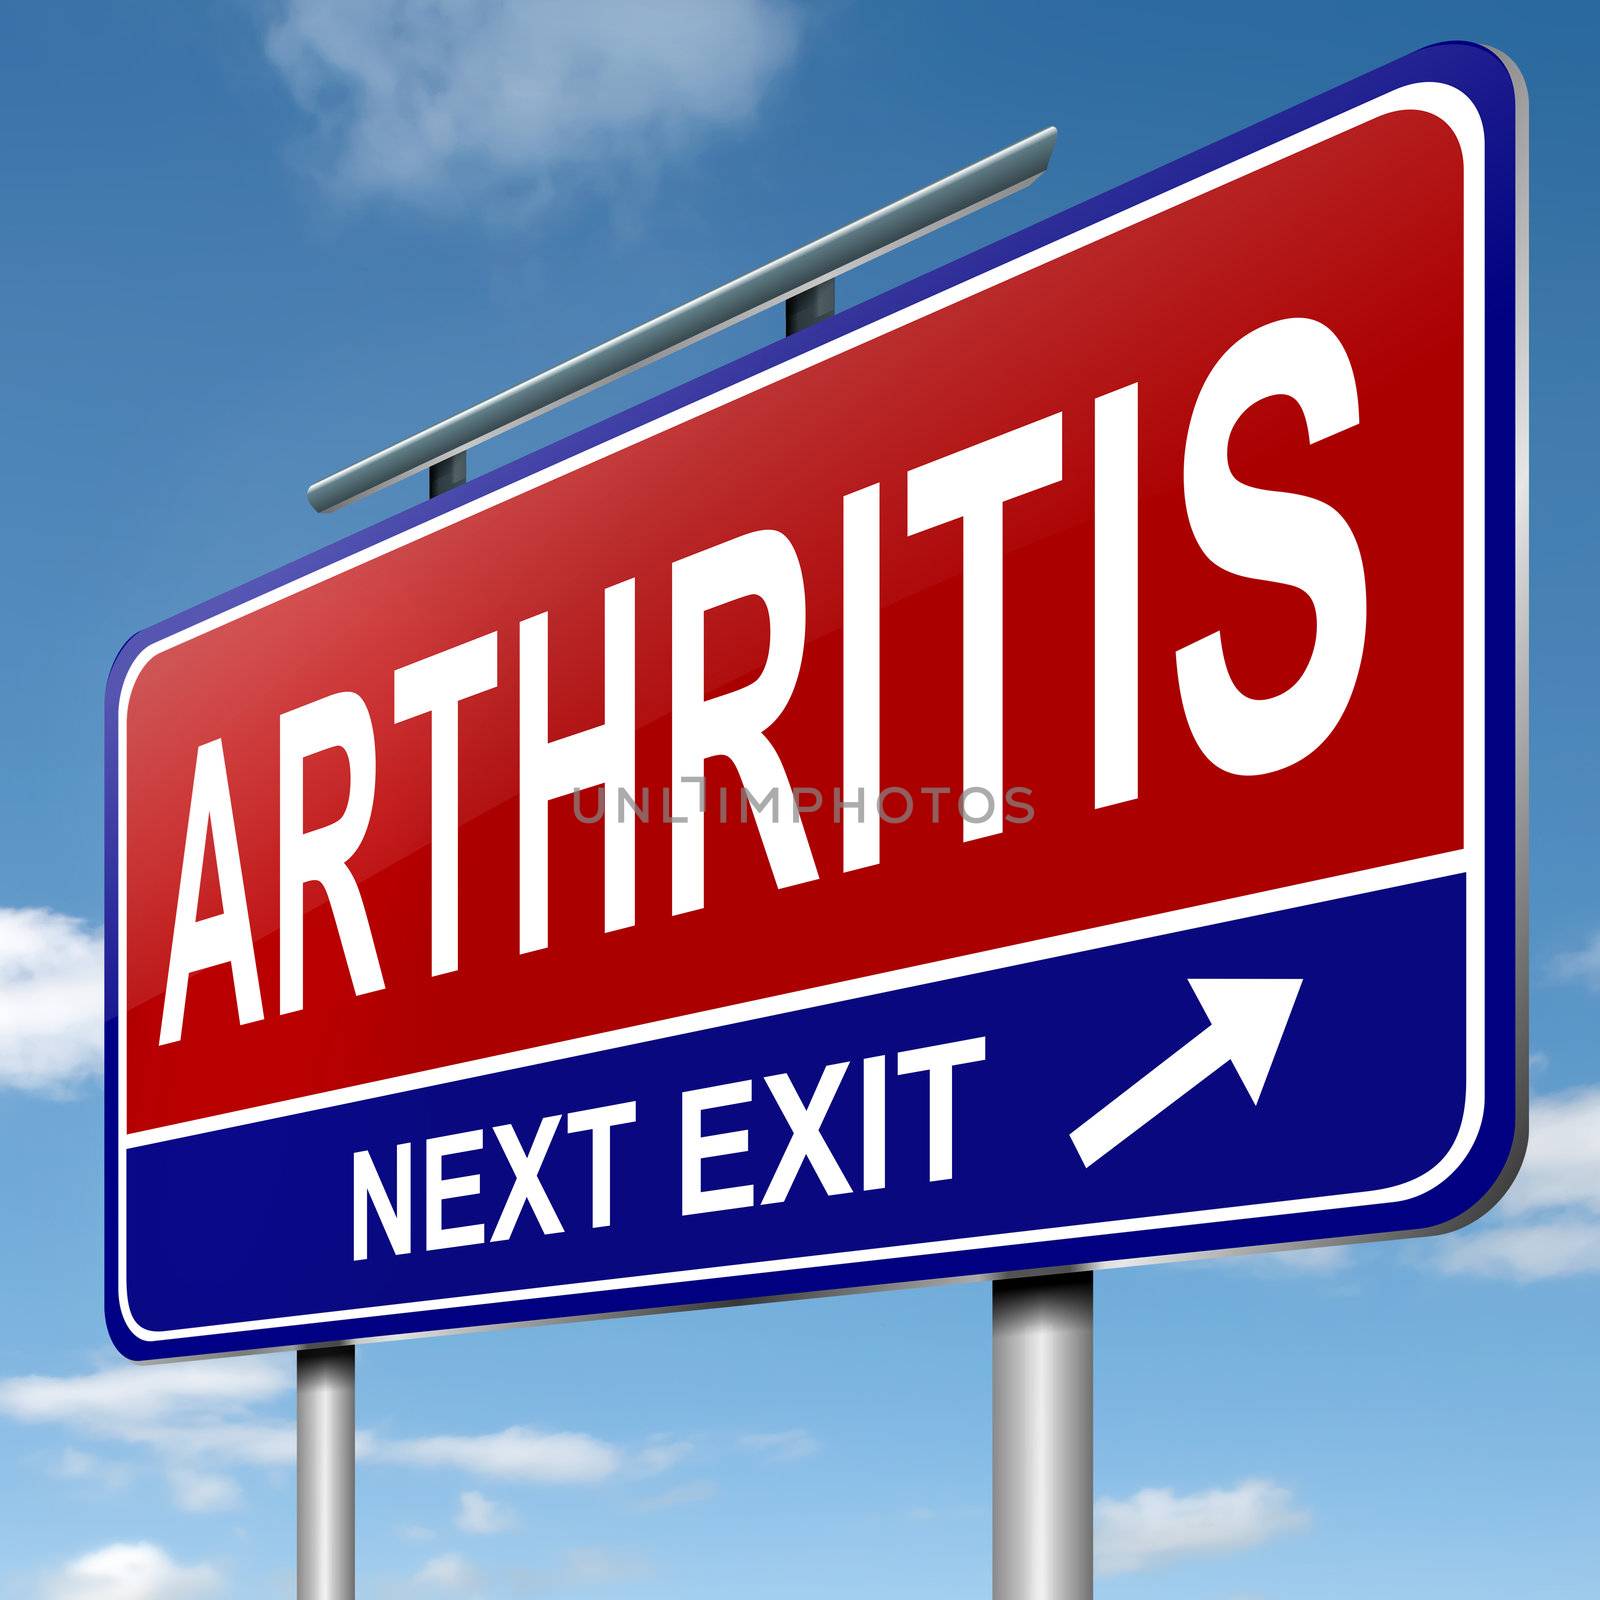 Arthritis concept. by 72soul